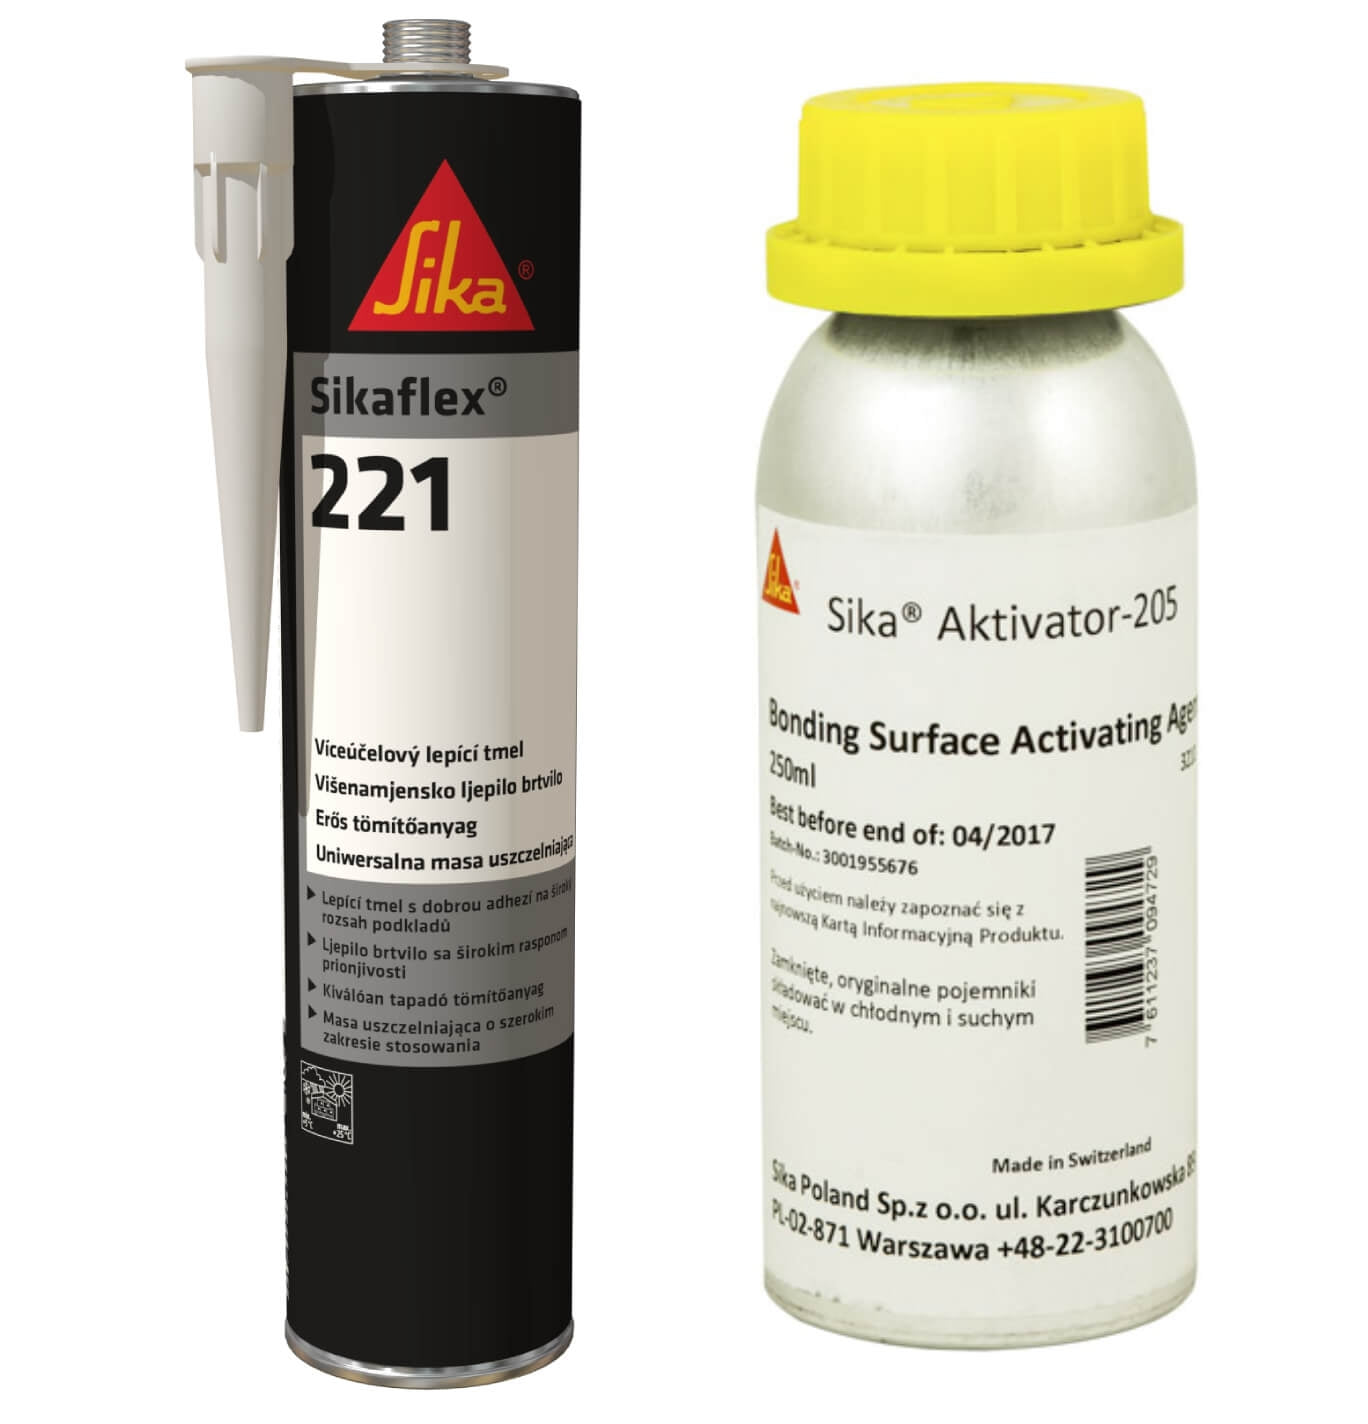 Sikaflex 221 White Multi Purpose Adhesive Sealant & Aktivator 205 Bundle Image